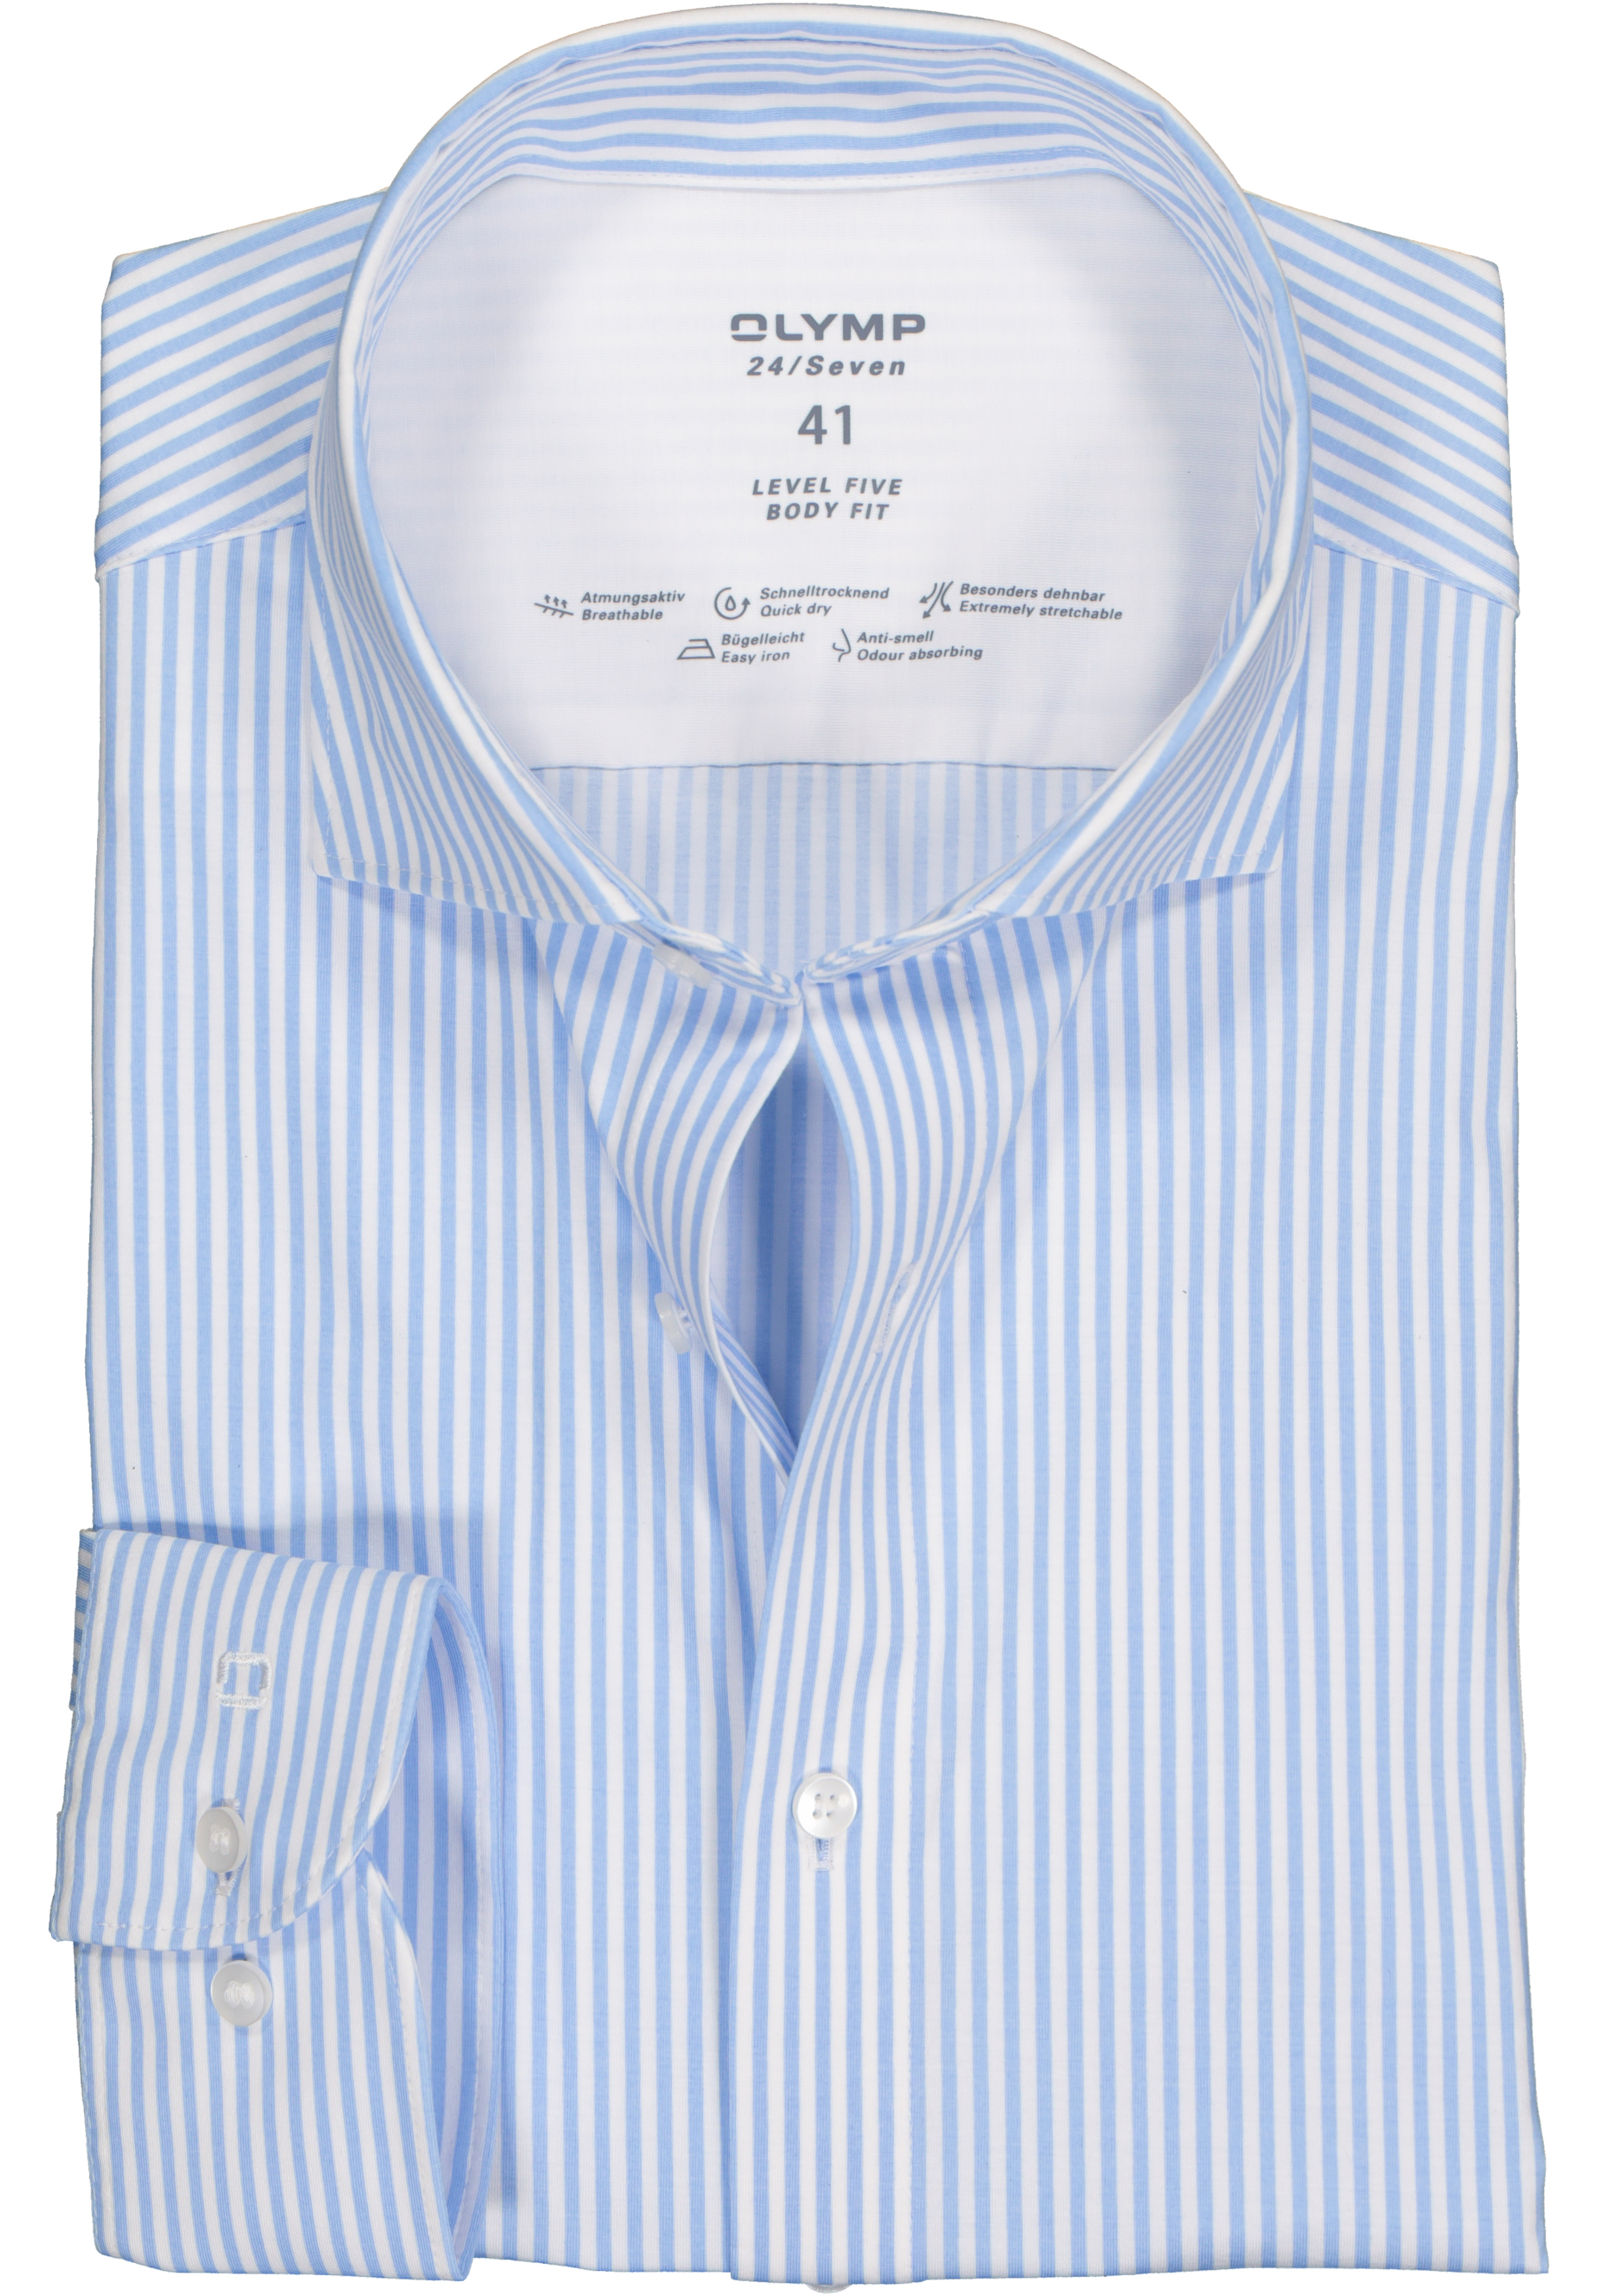 OLYMP Level 5 body fit overhemd 24/7, lichtblauw met wit gestreept tricot